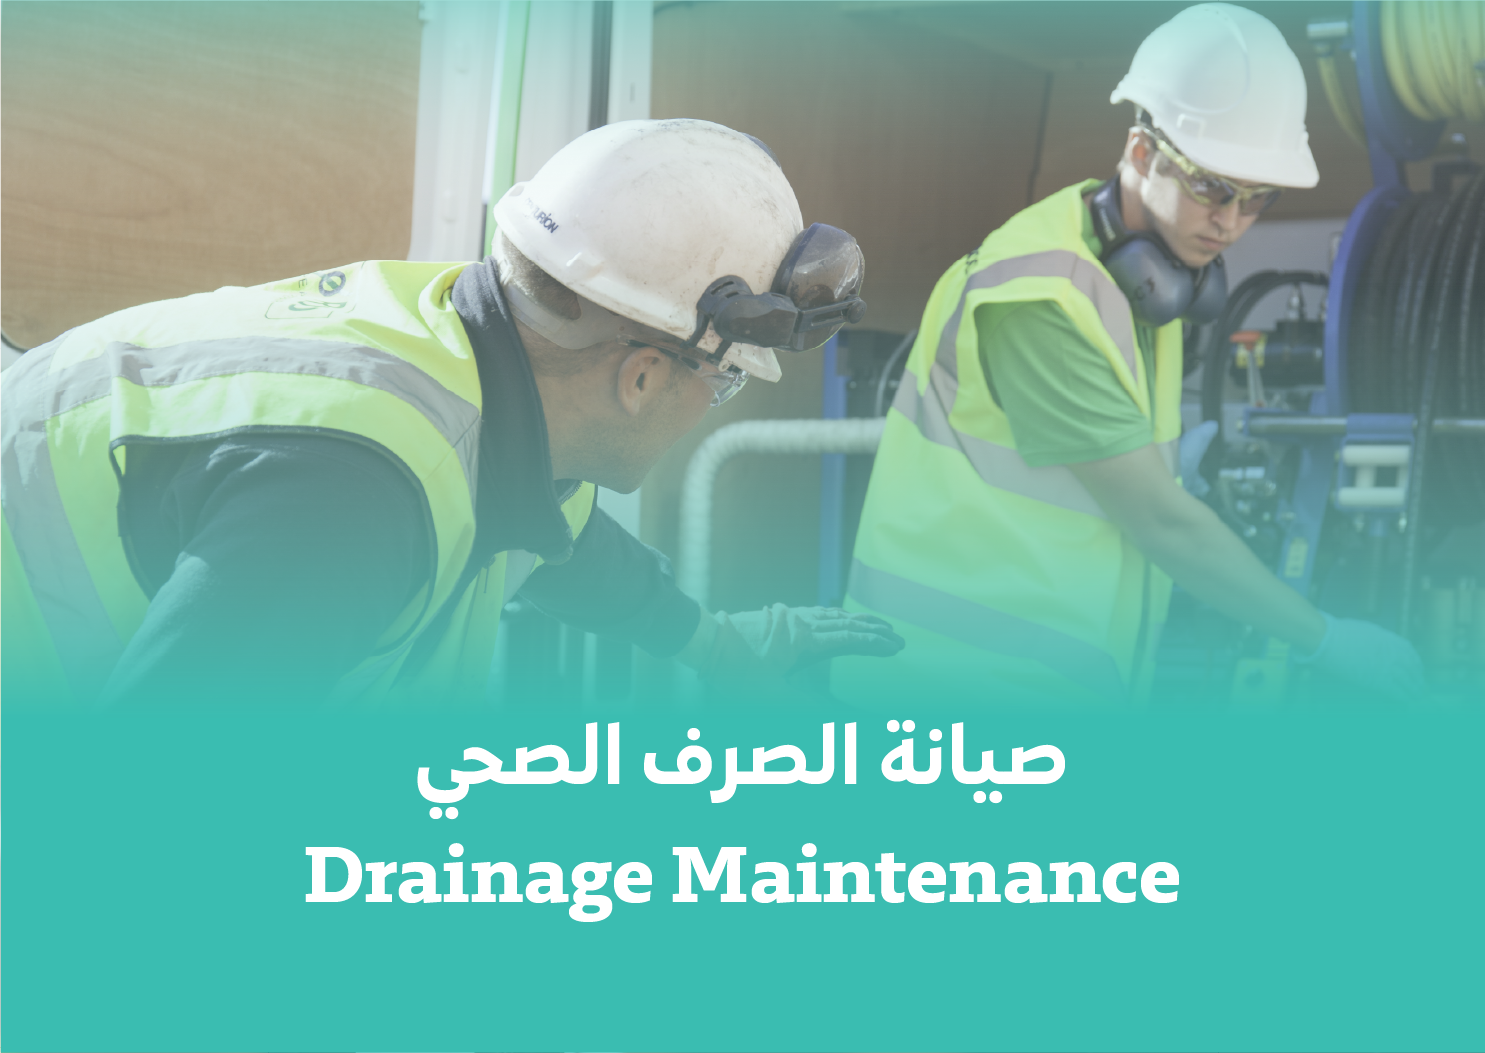 Drainage Maintenance